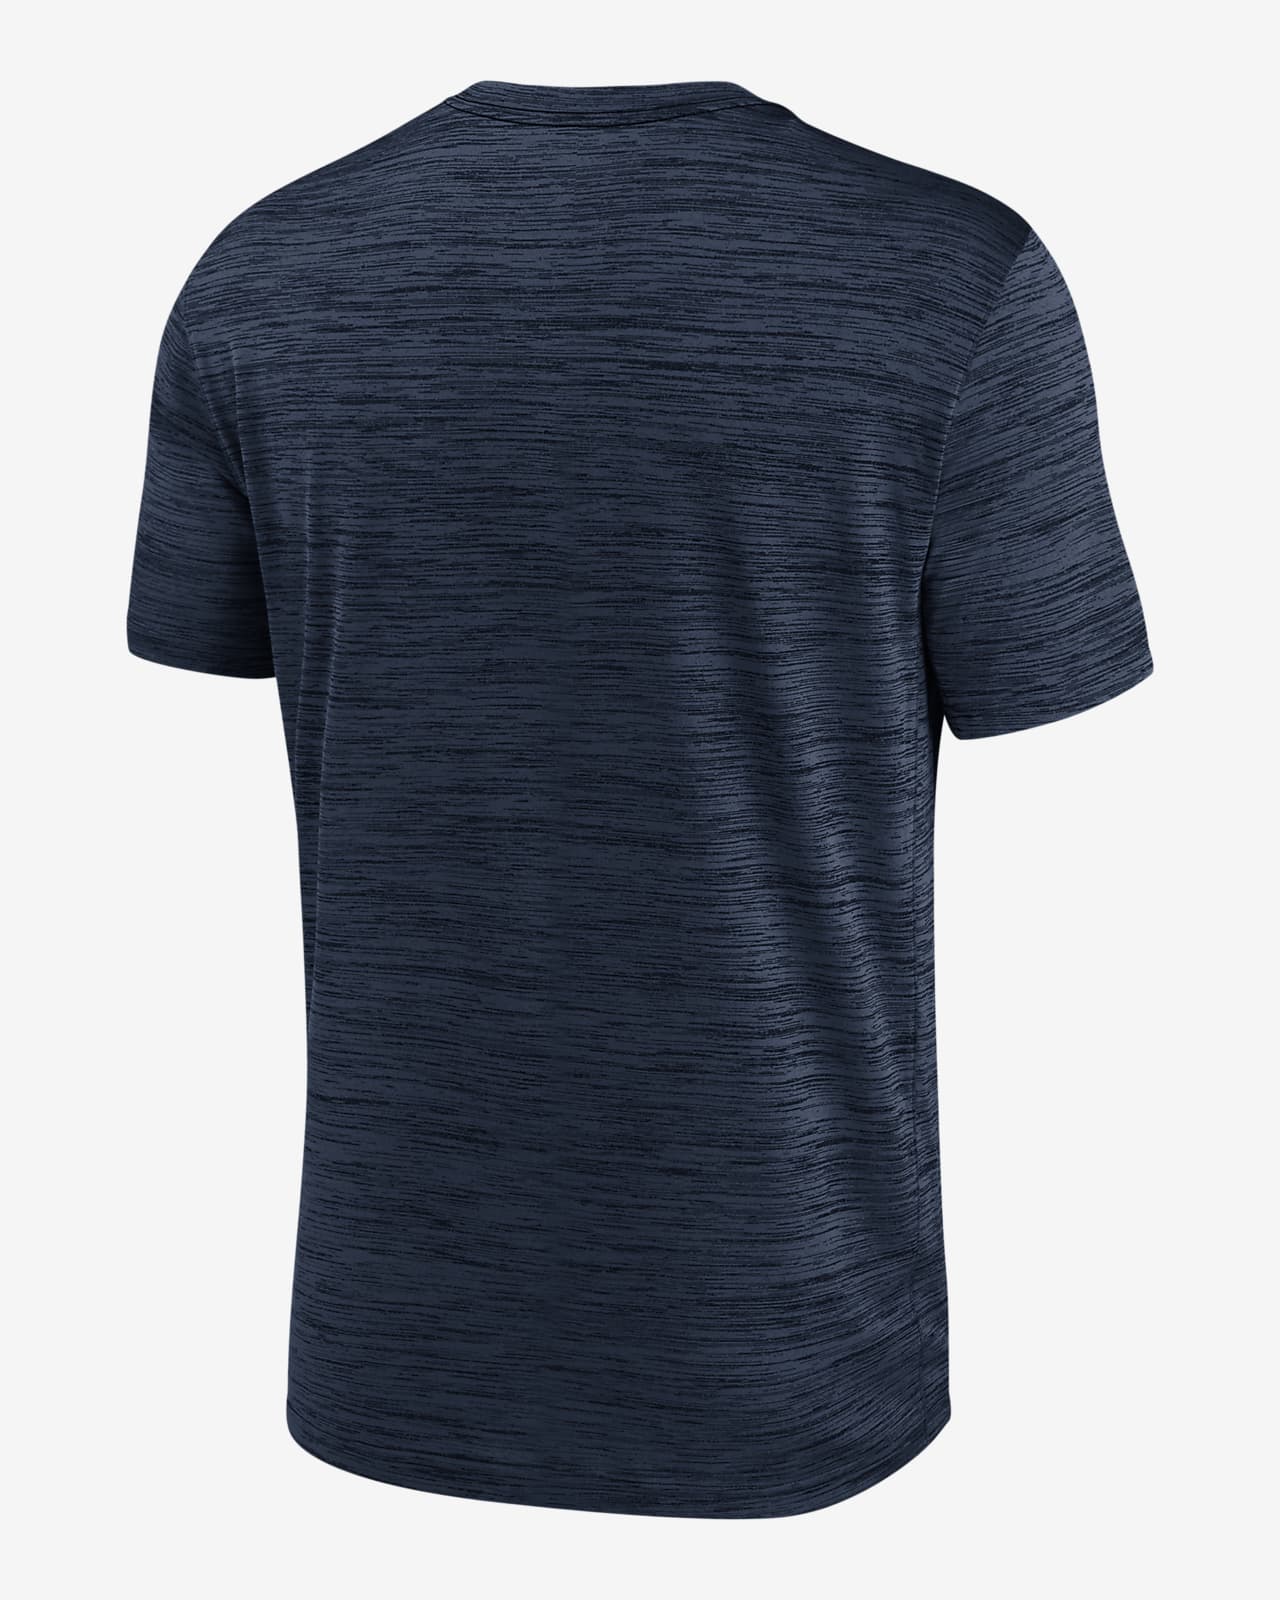 Nike Dri-FIT Team Legend (MLB Toronto Blue Jays) Men's Long-Sleeve T-Shirt.